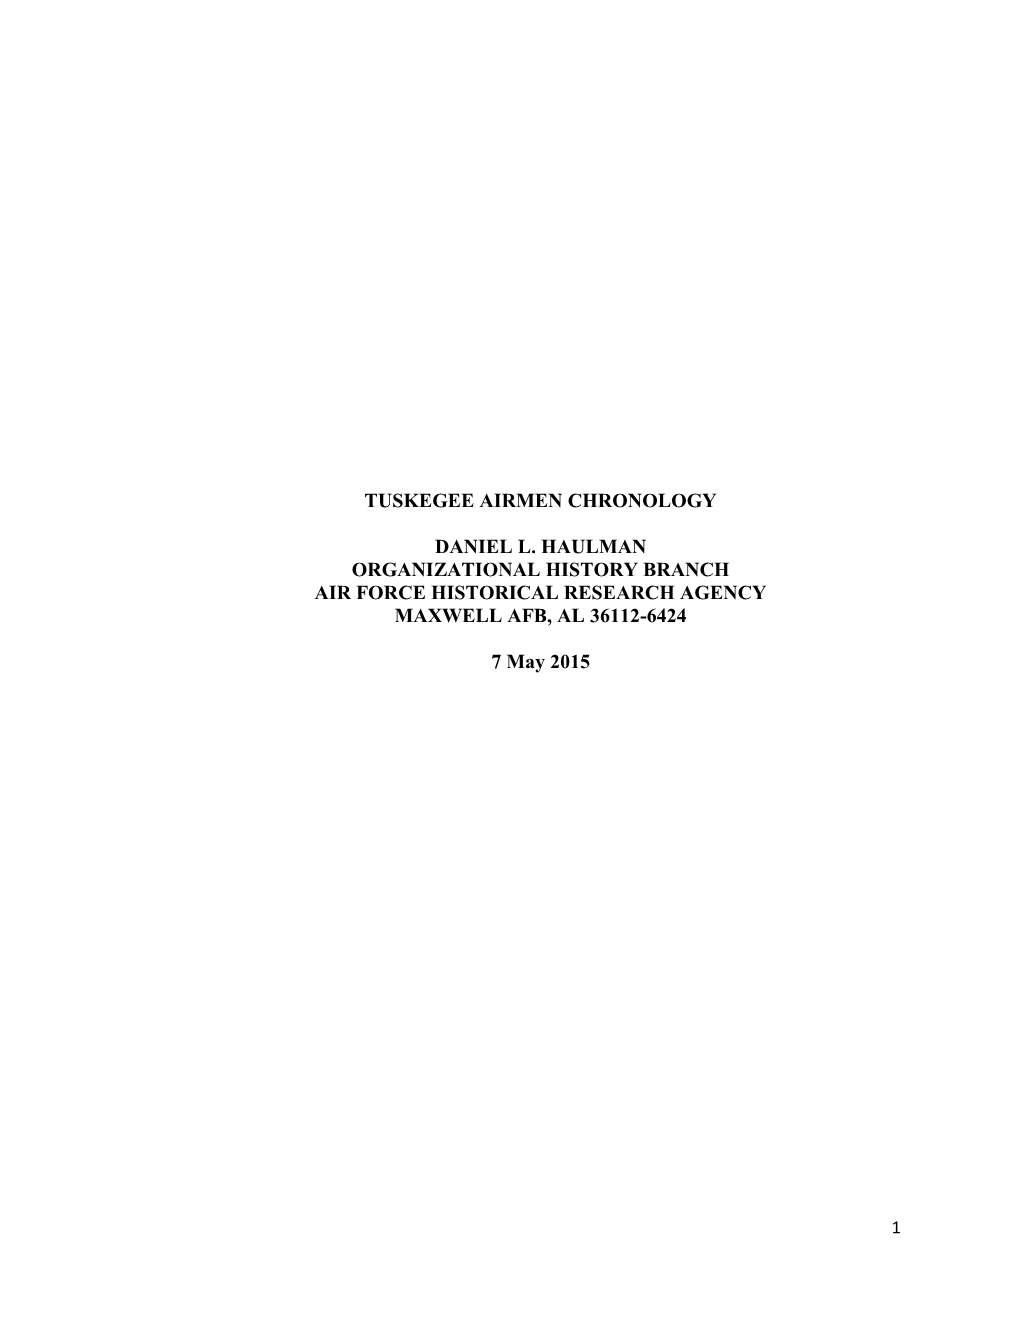 Tuskegee Airmen Chronology 05 2015